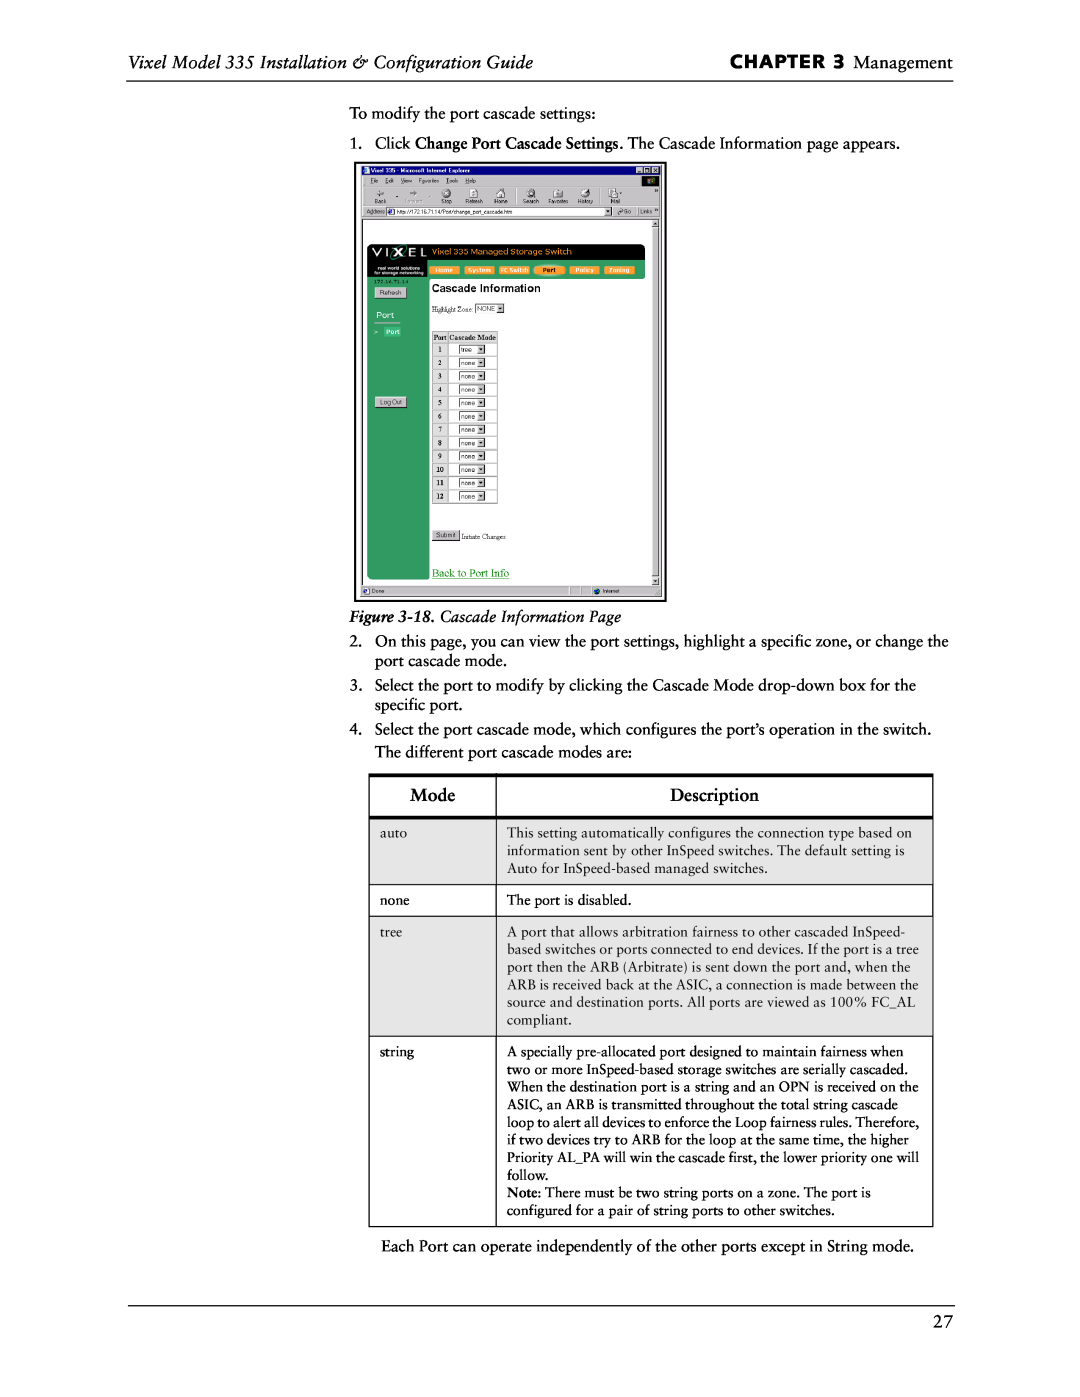 Vixel manual Management, Vixel Model 335 Installation & Configuration Guide, Description, 18. Cascade Information Page 